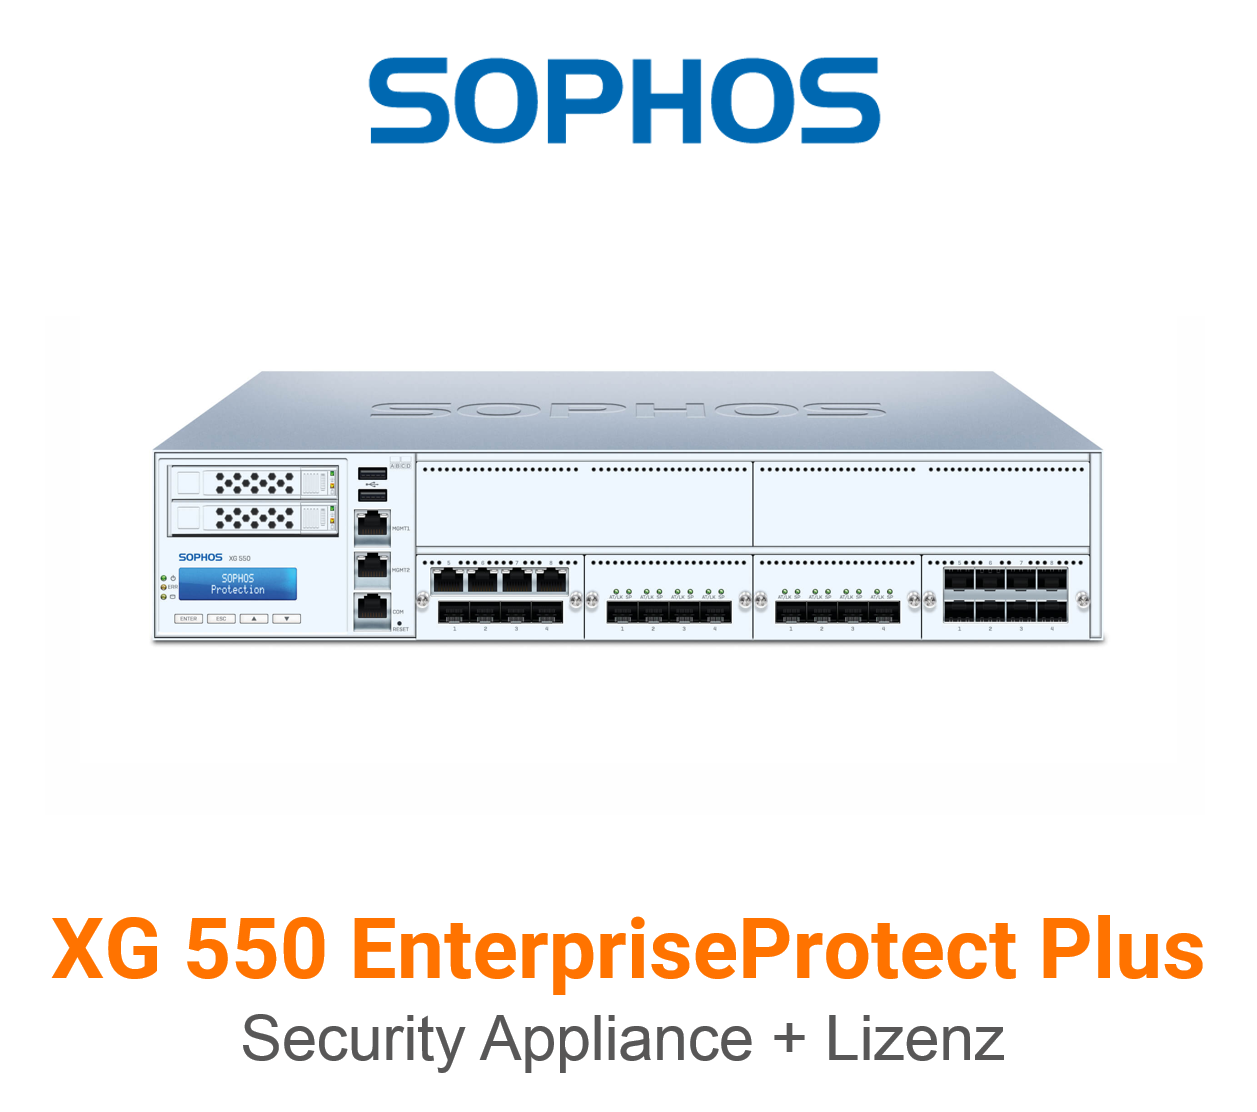 Sophos XG 550 EnterpriseProtect Plus Bundle (Hardware + Lizenz)